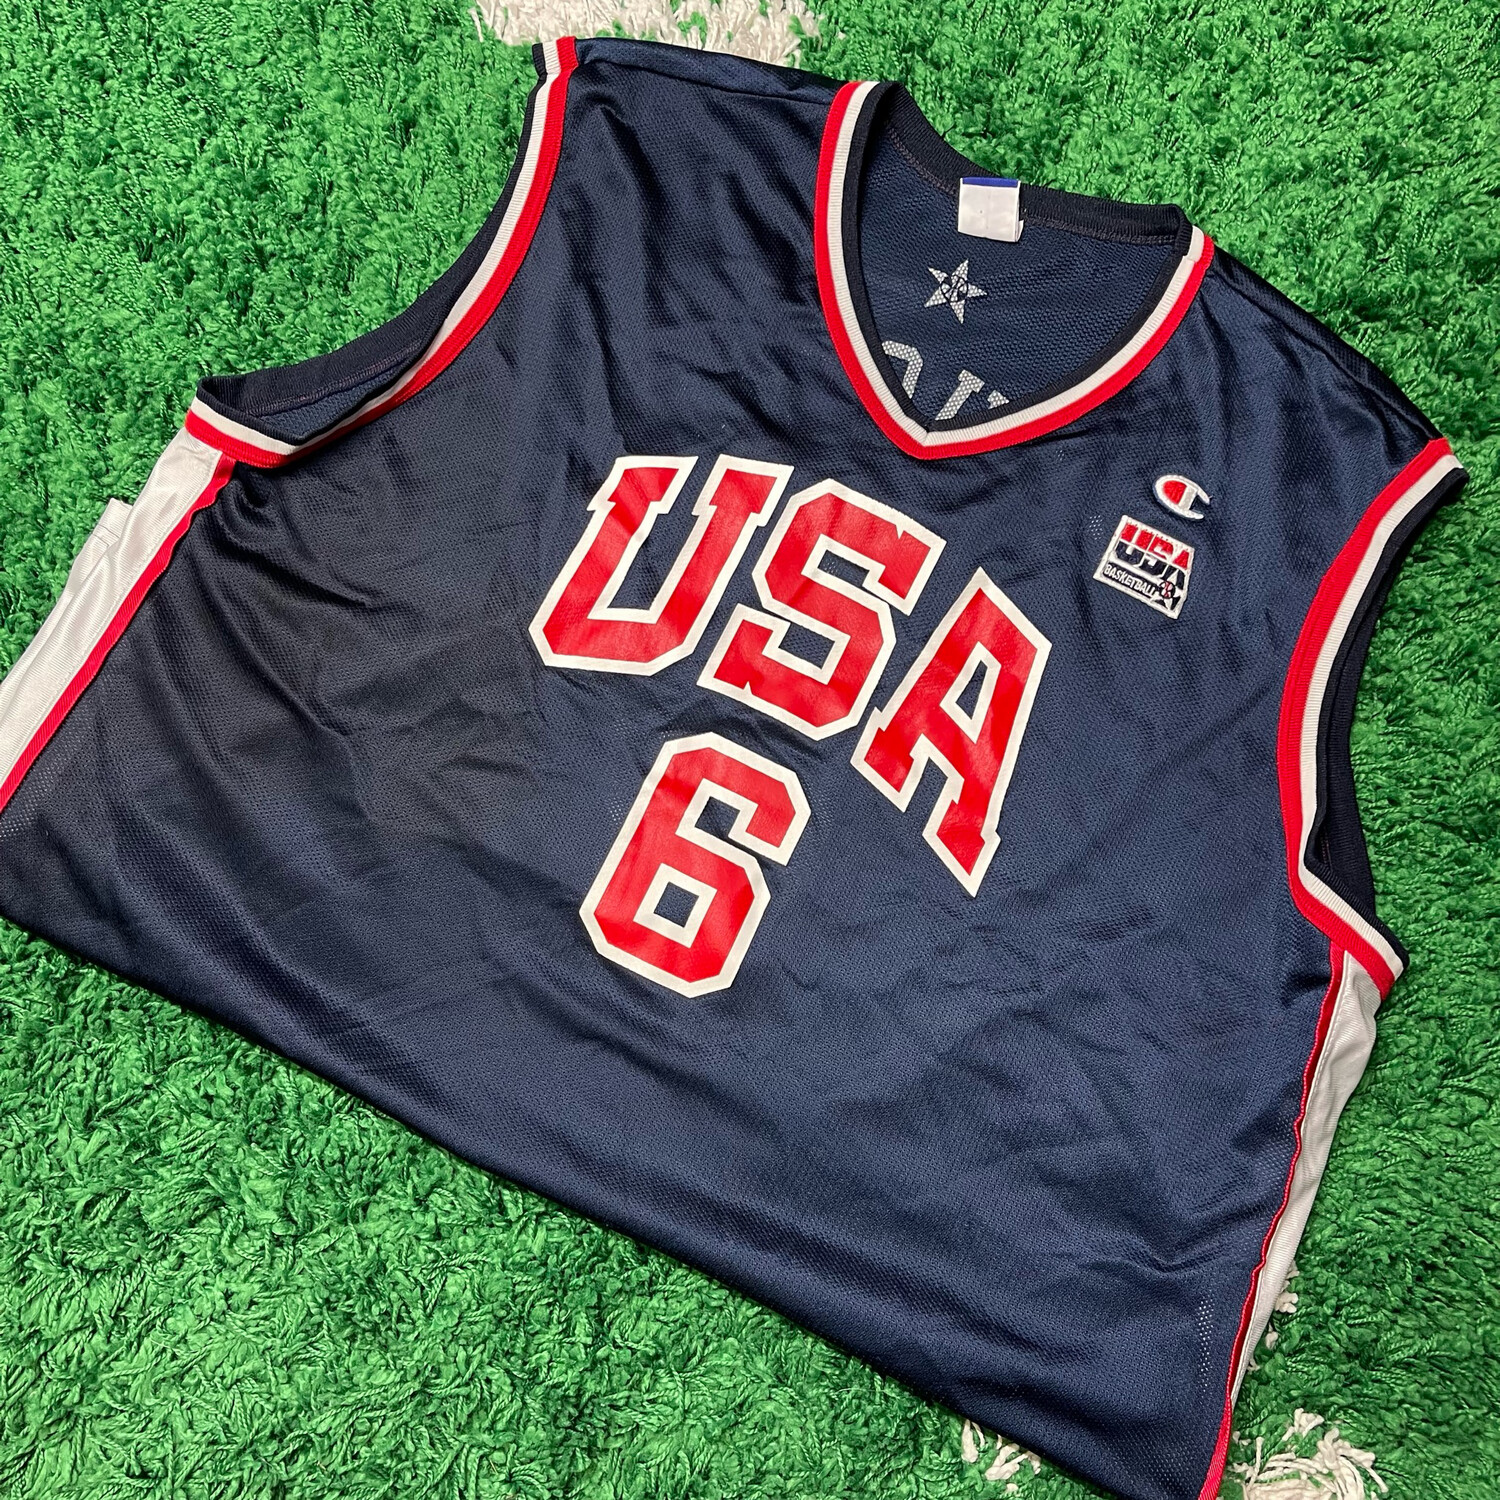 Team USA Houston Champion Jersey Size XL